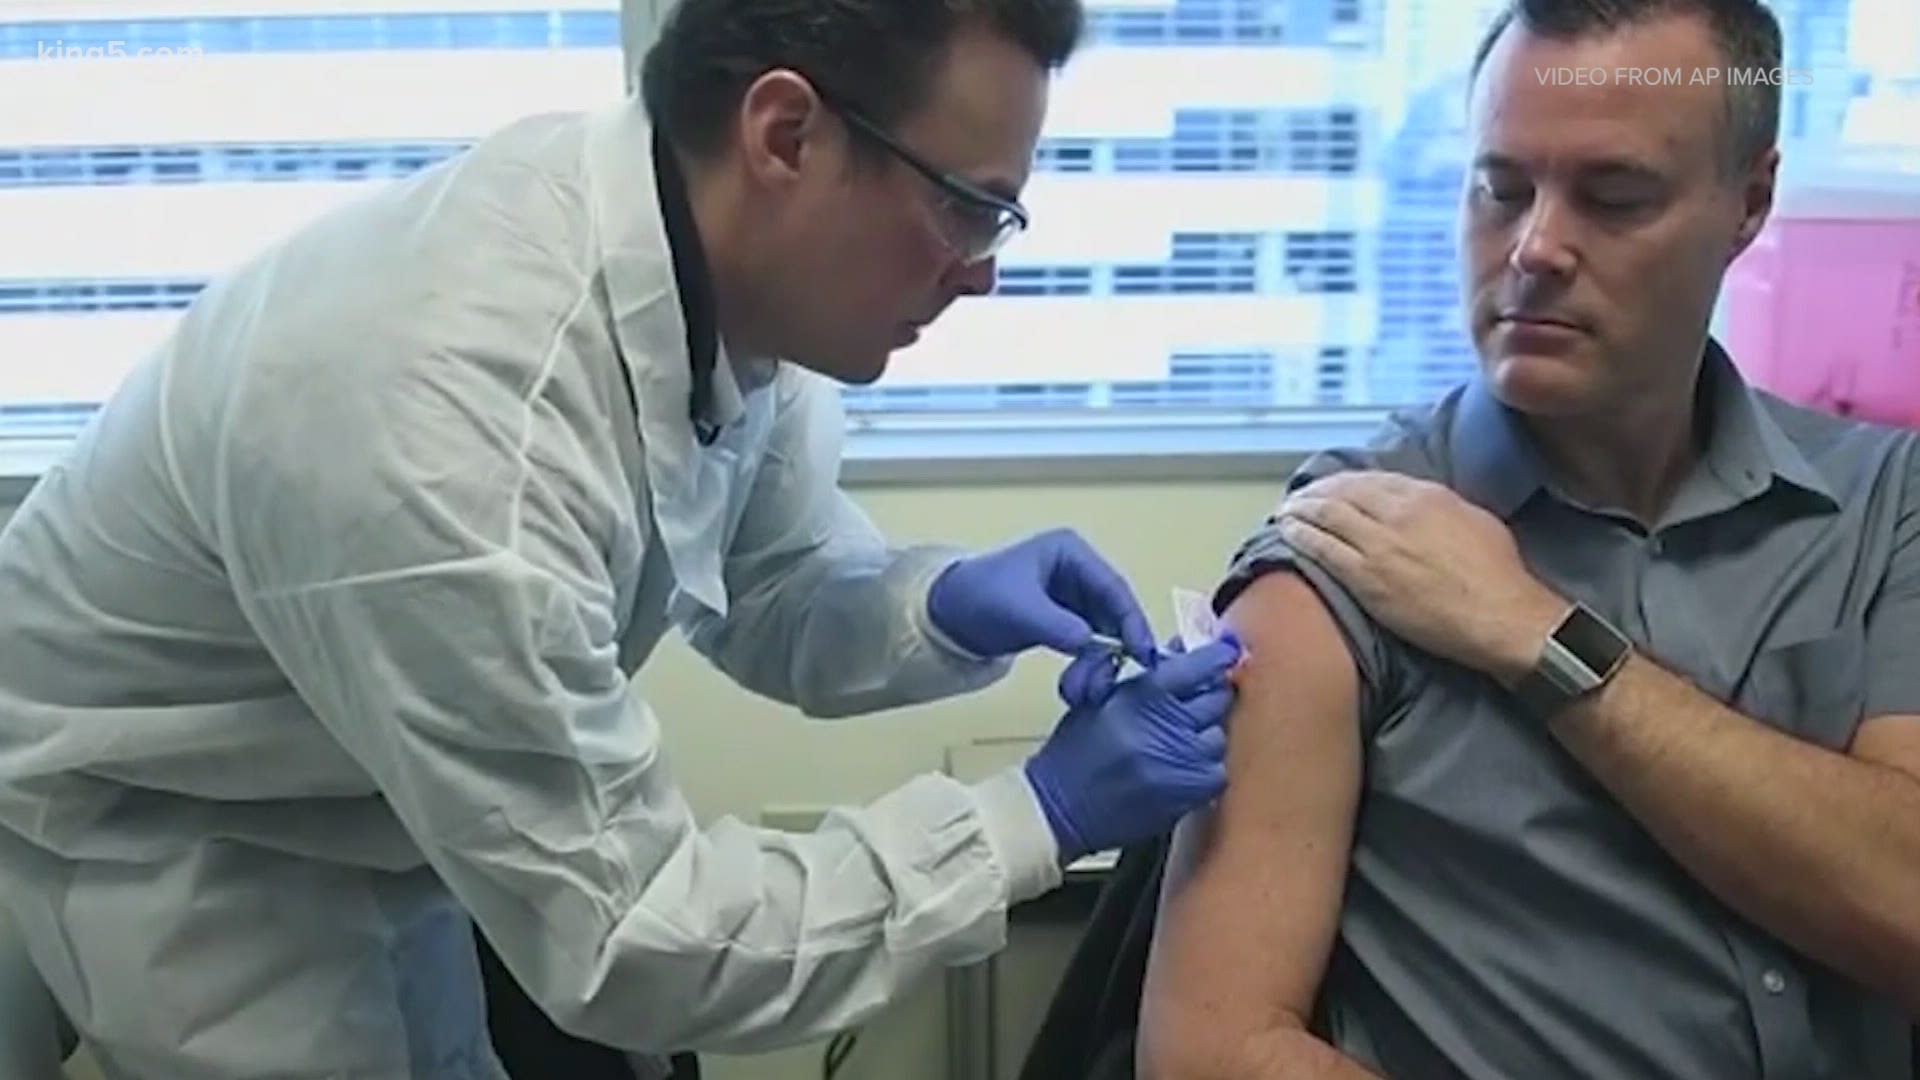 An experimental vaccine against coronavirus tested in Seattle showed encouraging results in volunteers.